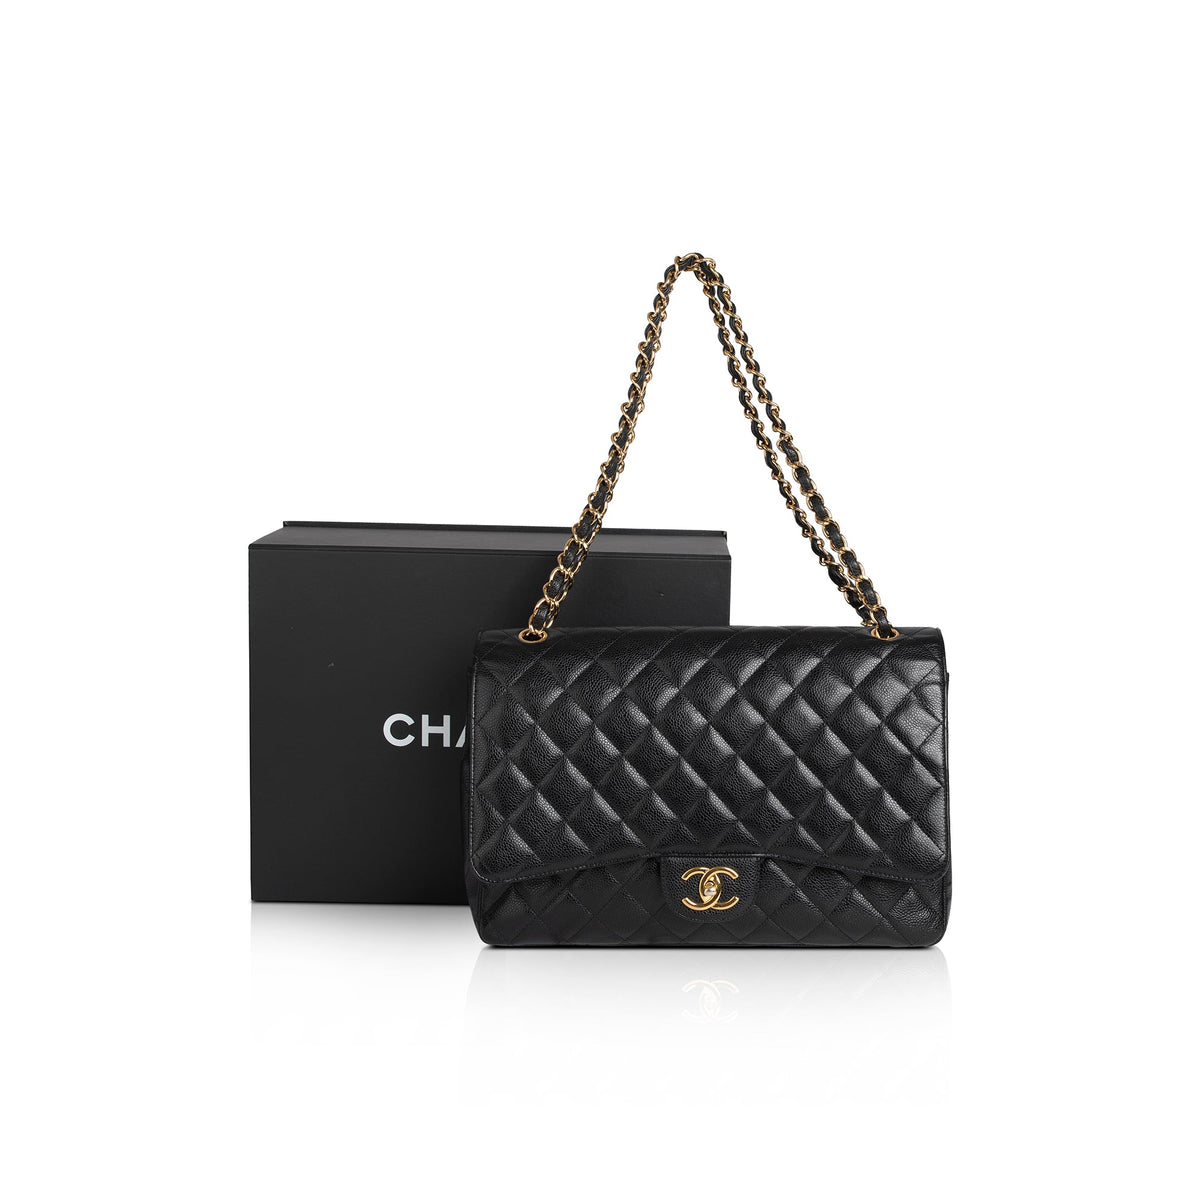 Authentic Chanel Maxi Single Flap Bag Black Caviar Leather Silver